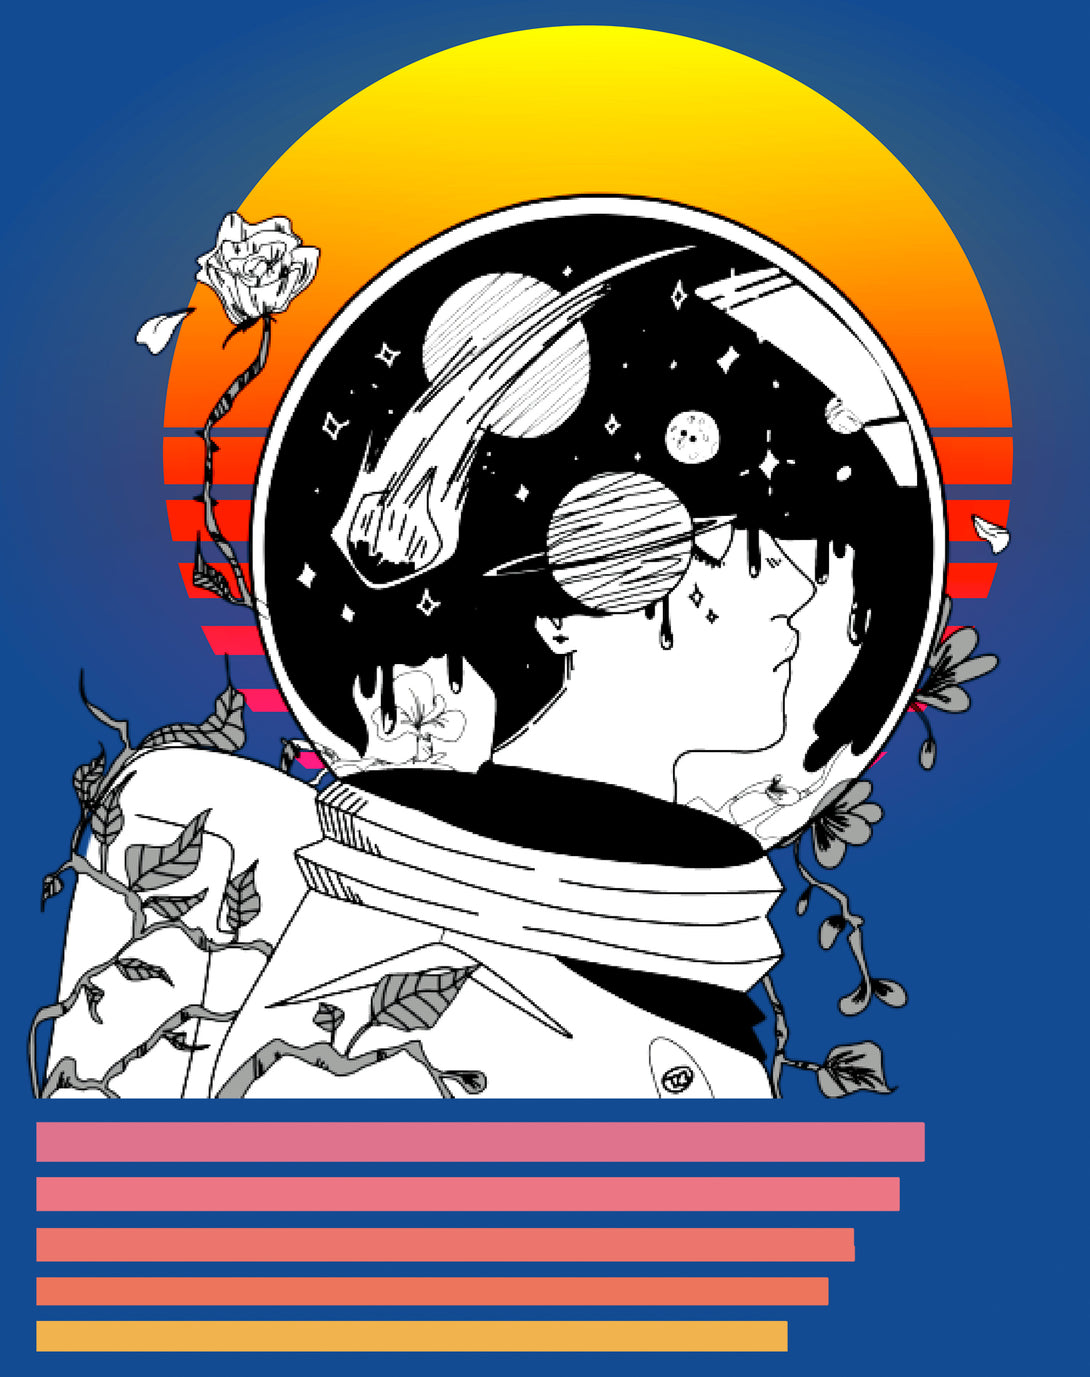 Science Space Astronaut Anime Retro Vintage Comic Nerd Geek Official Men's T-shirt Blue - Urban Species Design Close Up